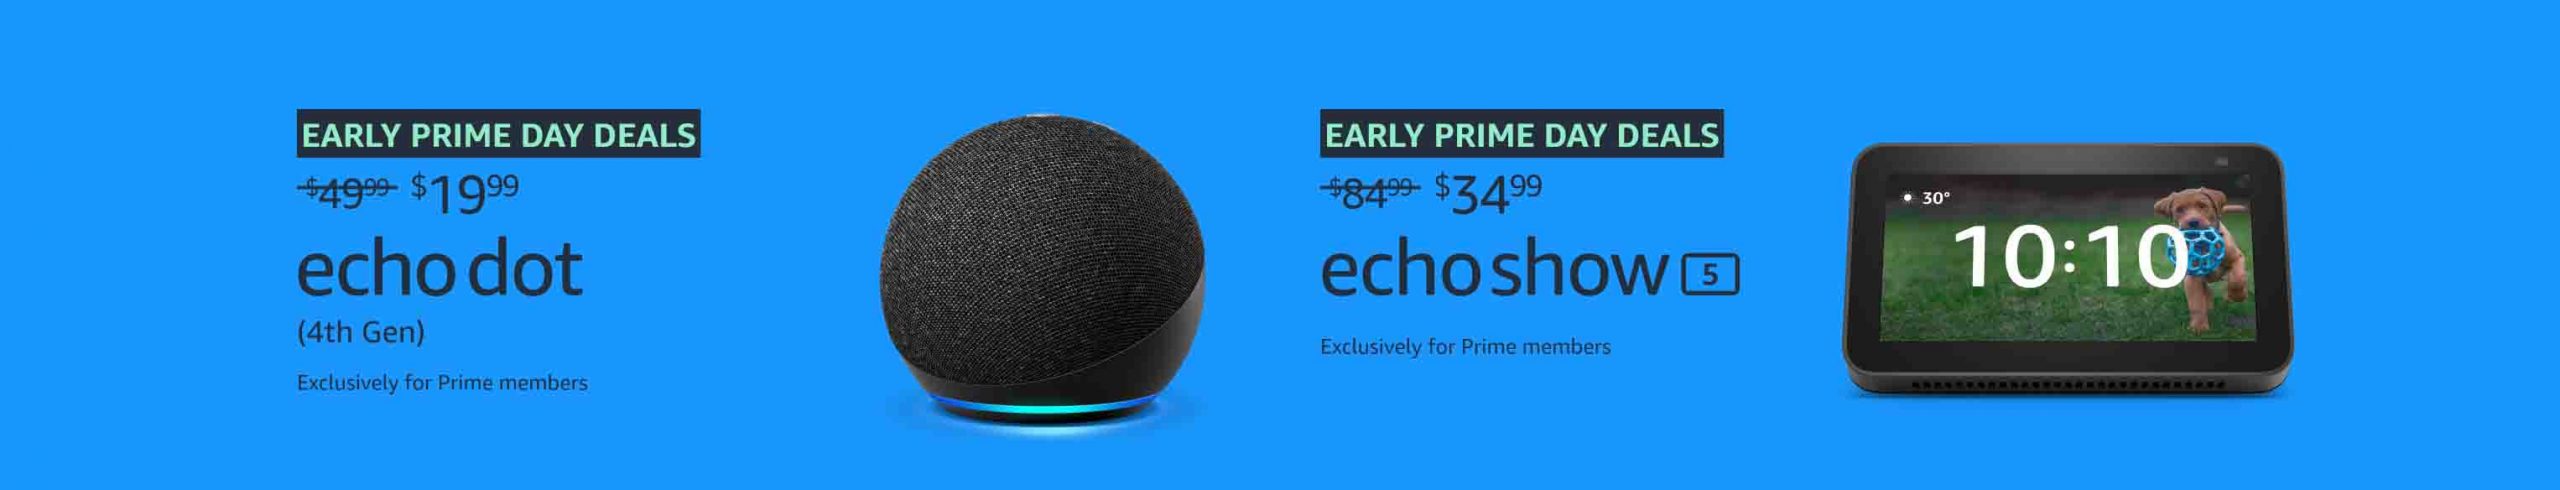 Echo device promo